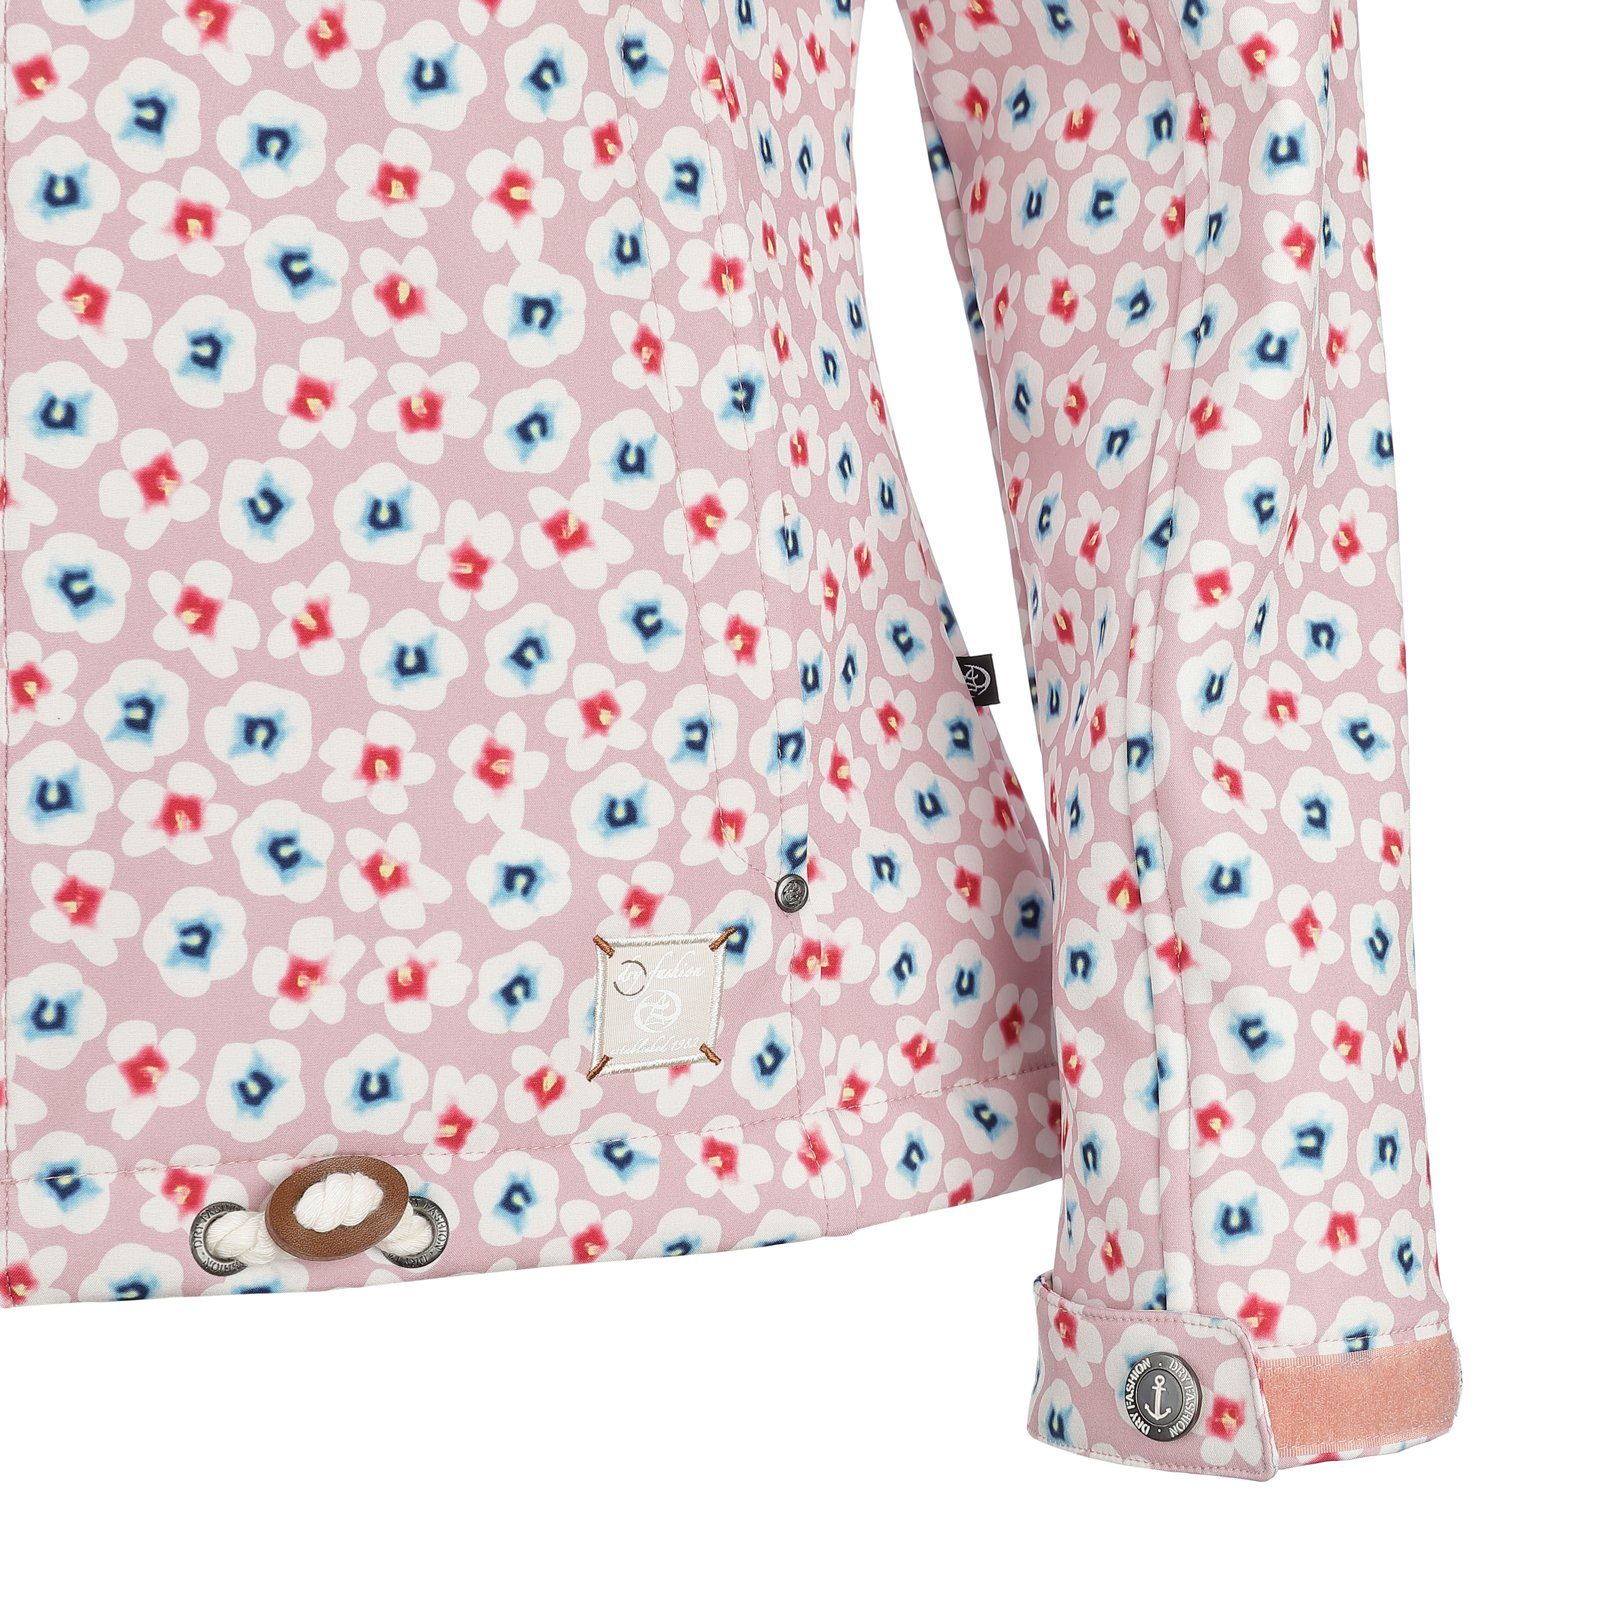 Dry Fashion Softshelljacke Damen Blumen-Print atmungsaktiv alt-rosa Fleece-Futter Kapuze Jacke Wismar